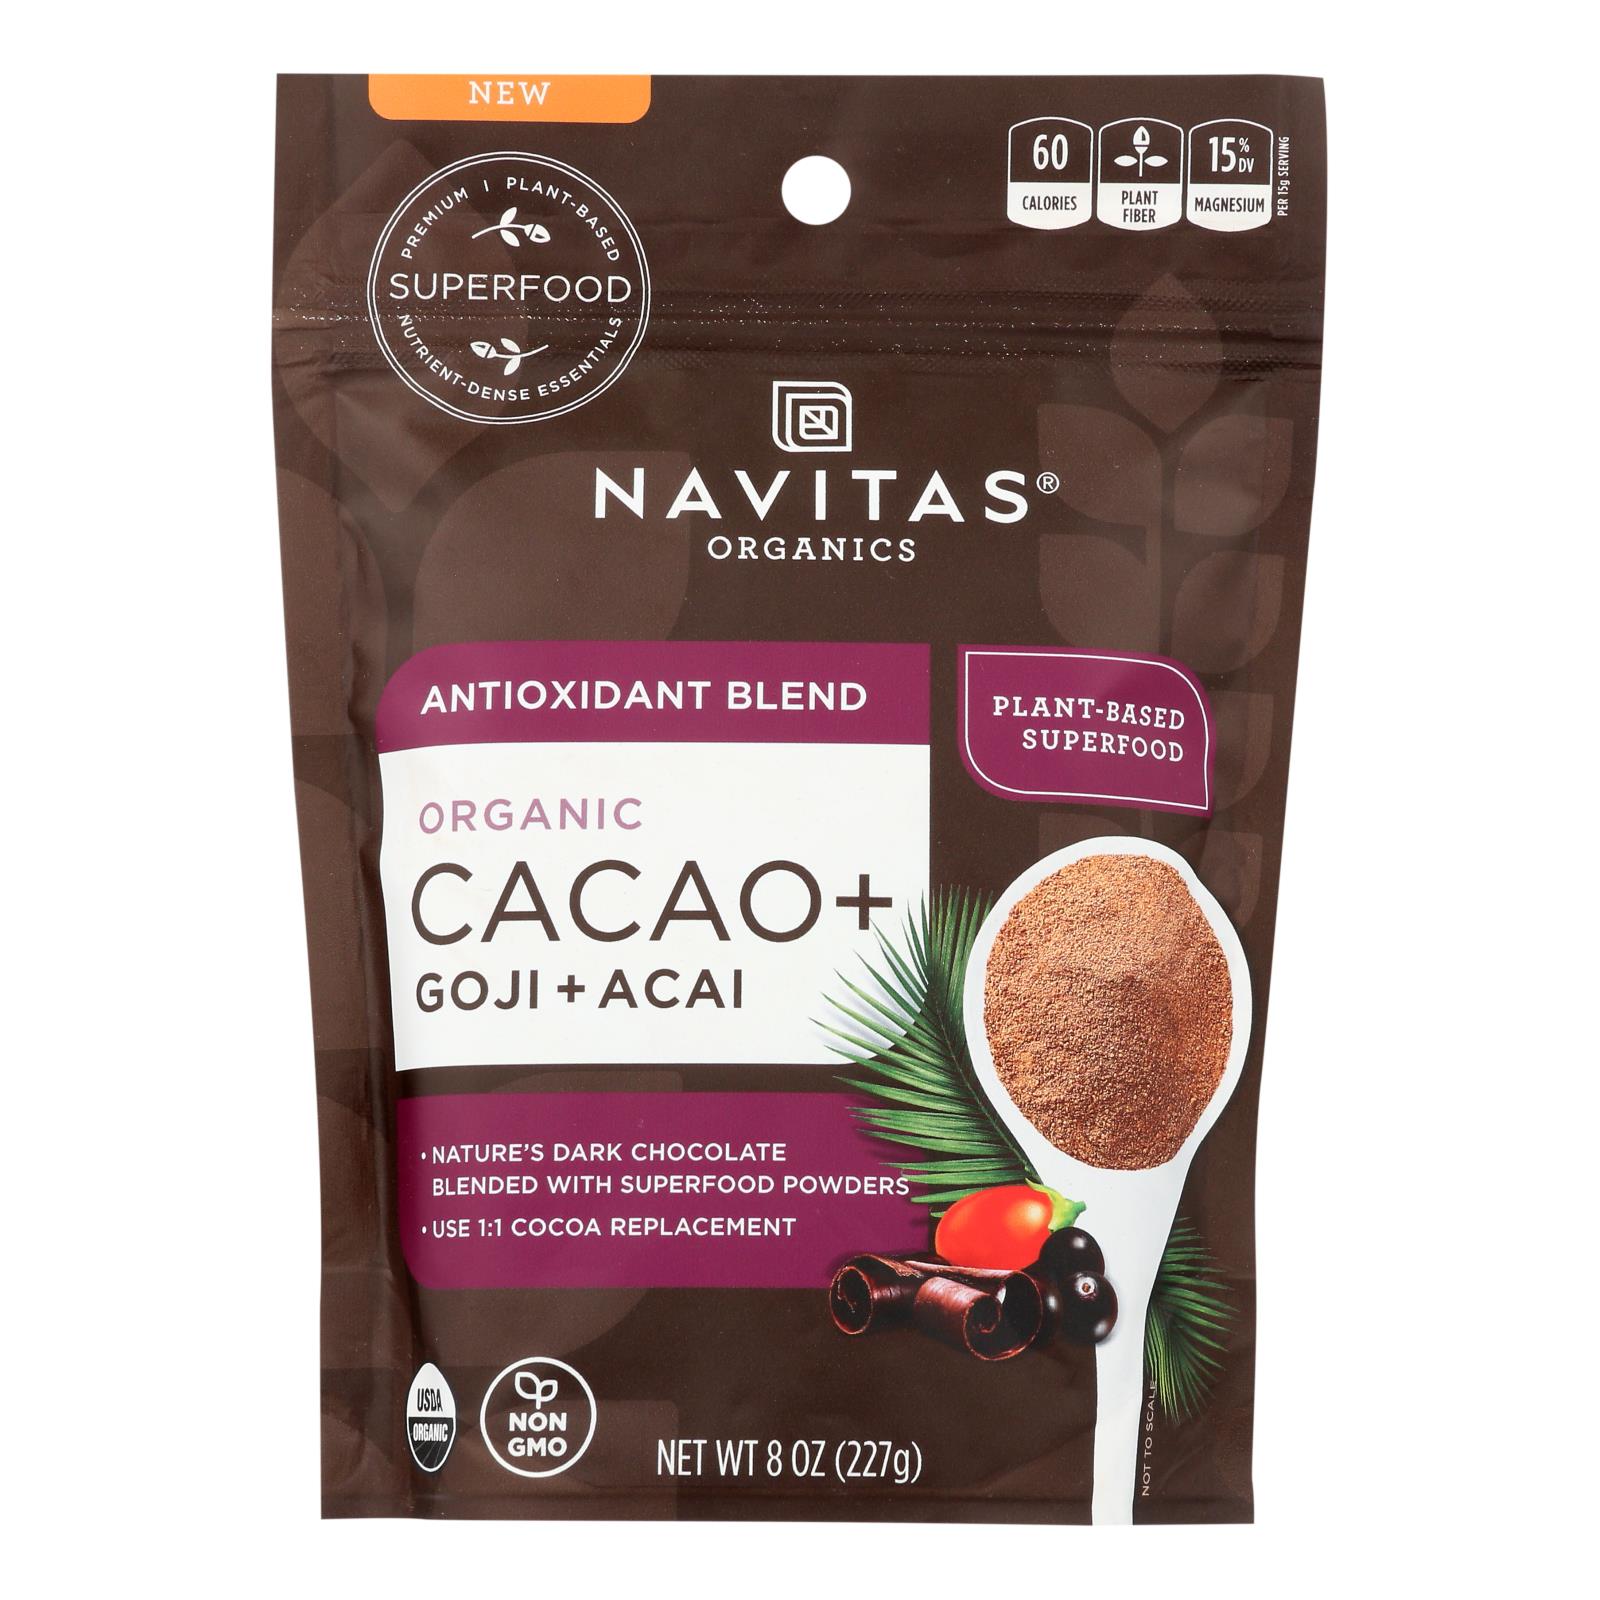 Navitas Organics - Cacao + Organic Antiox Powder - 6개 묶음상품 - 8 OZ